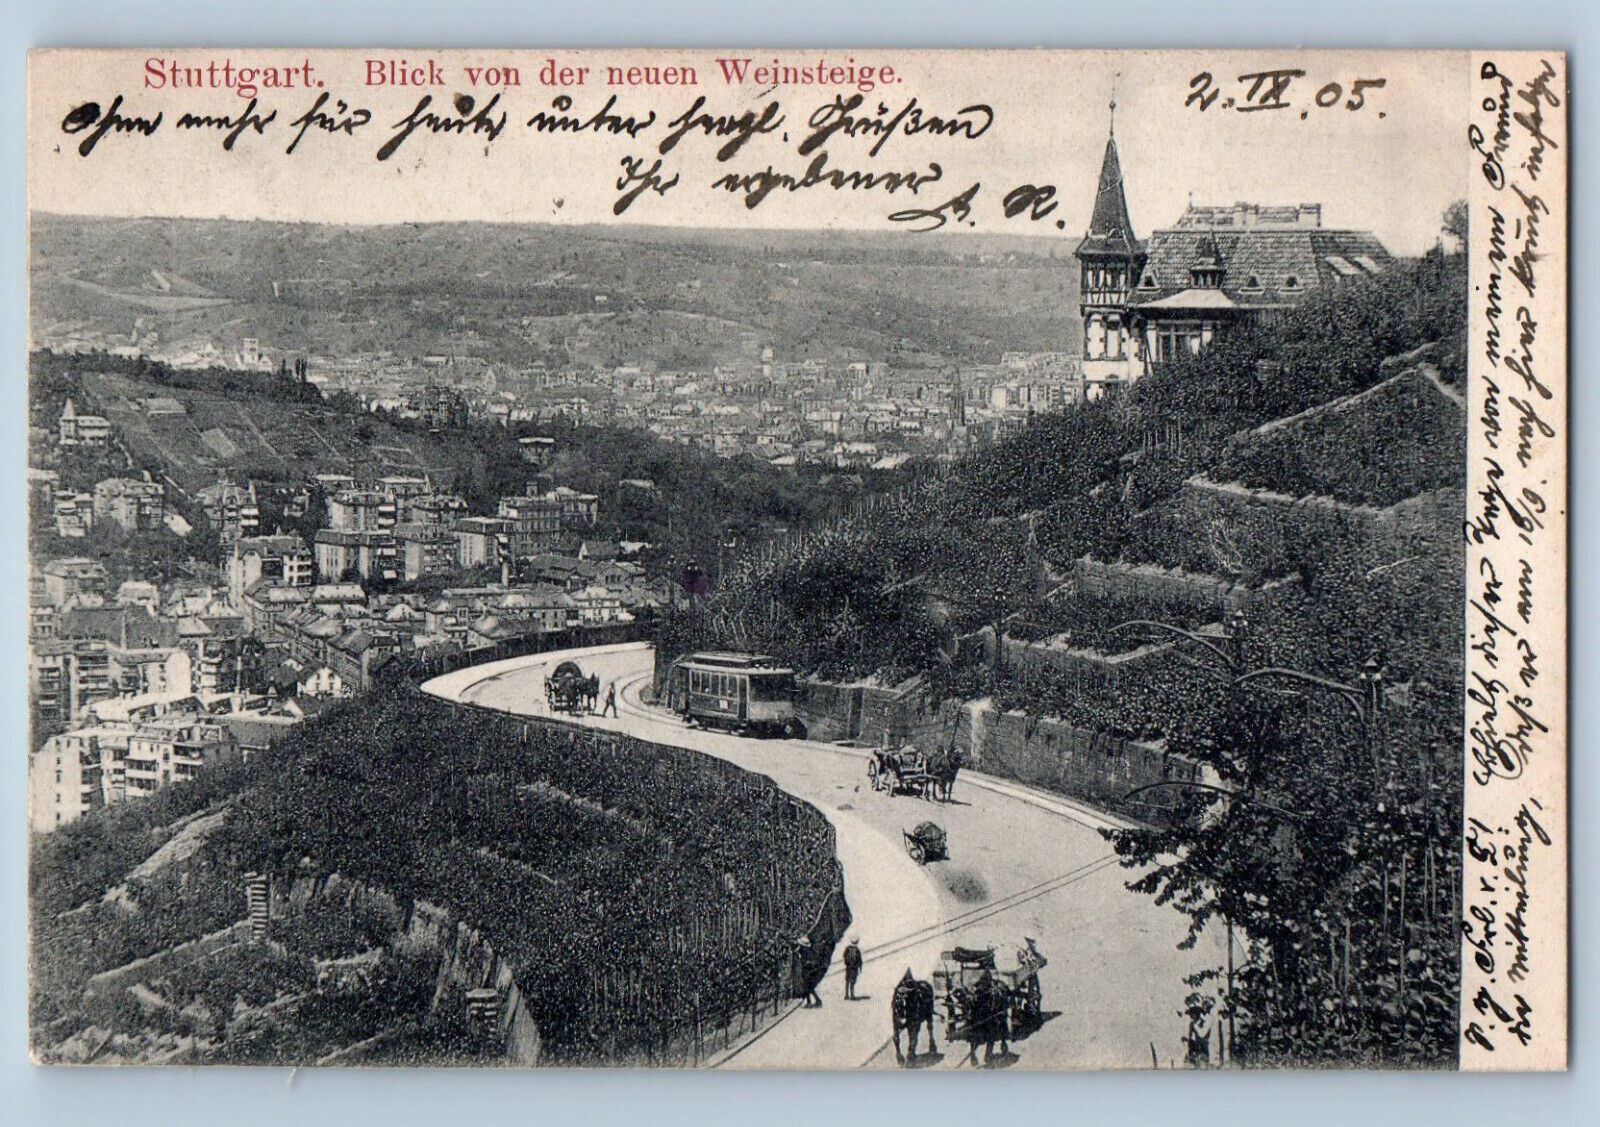 Stuttgart Baden-Württemberg Germany Postcard View From The New Weinsteige 1905